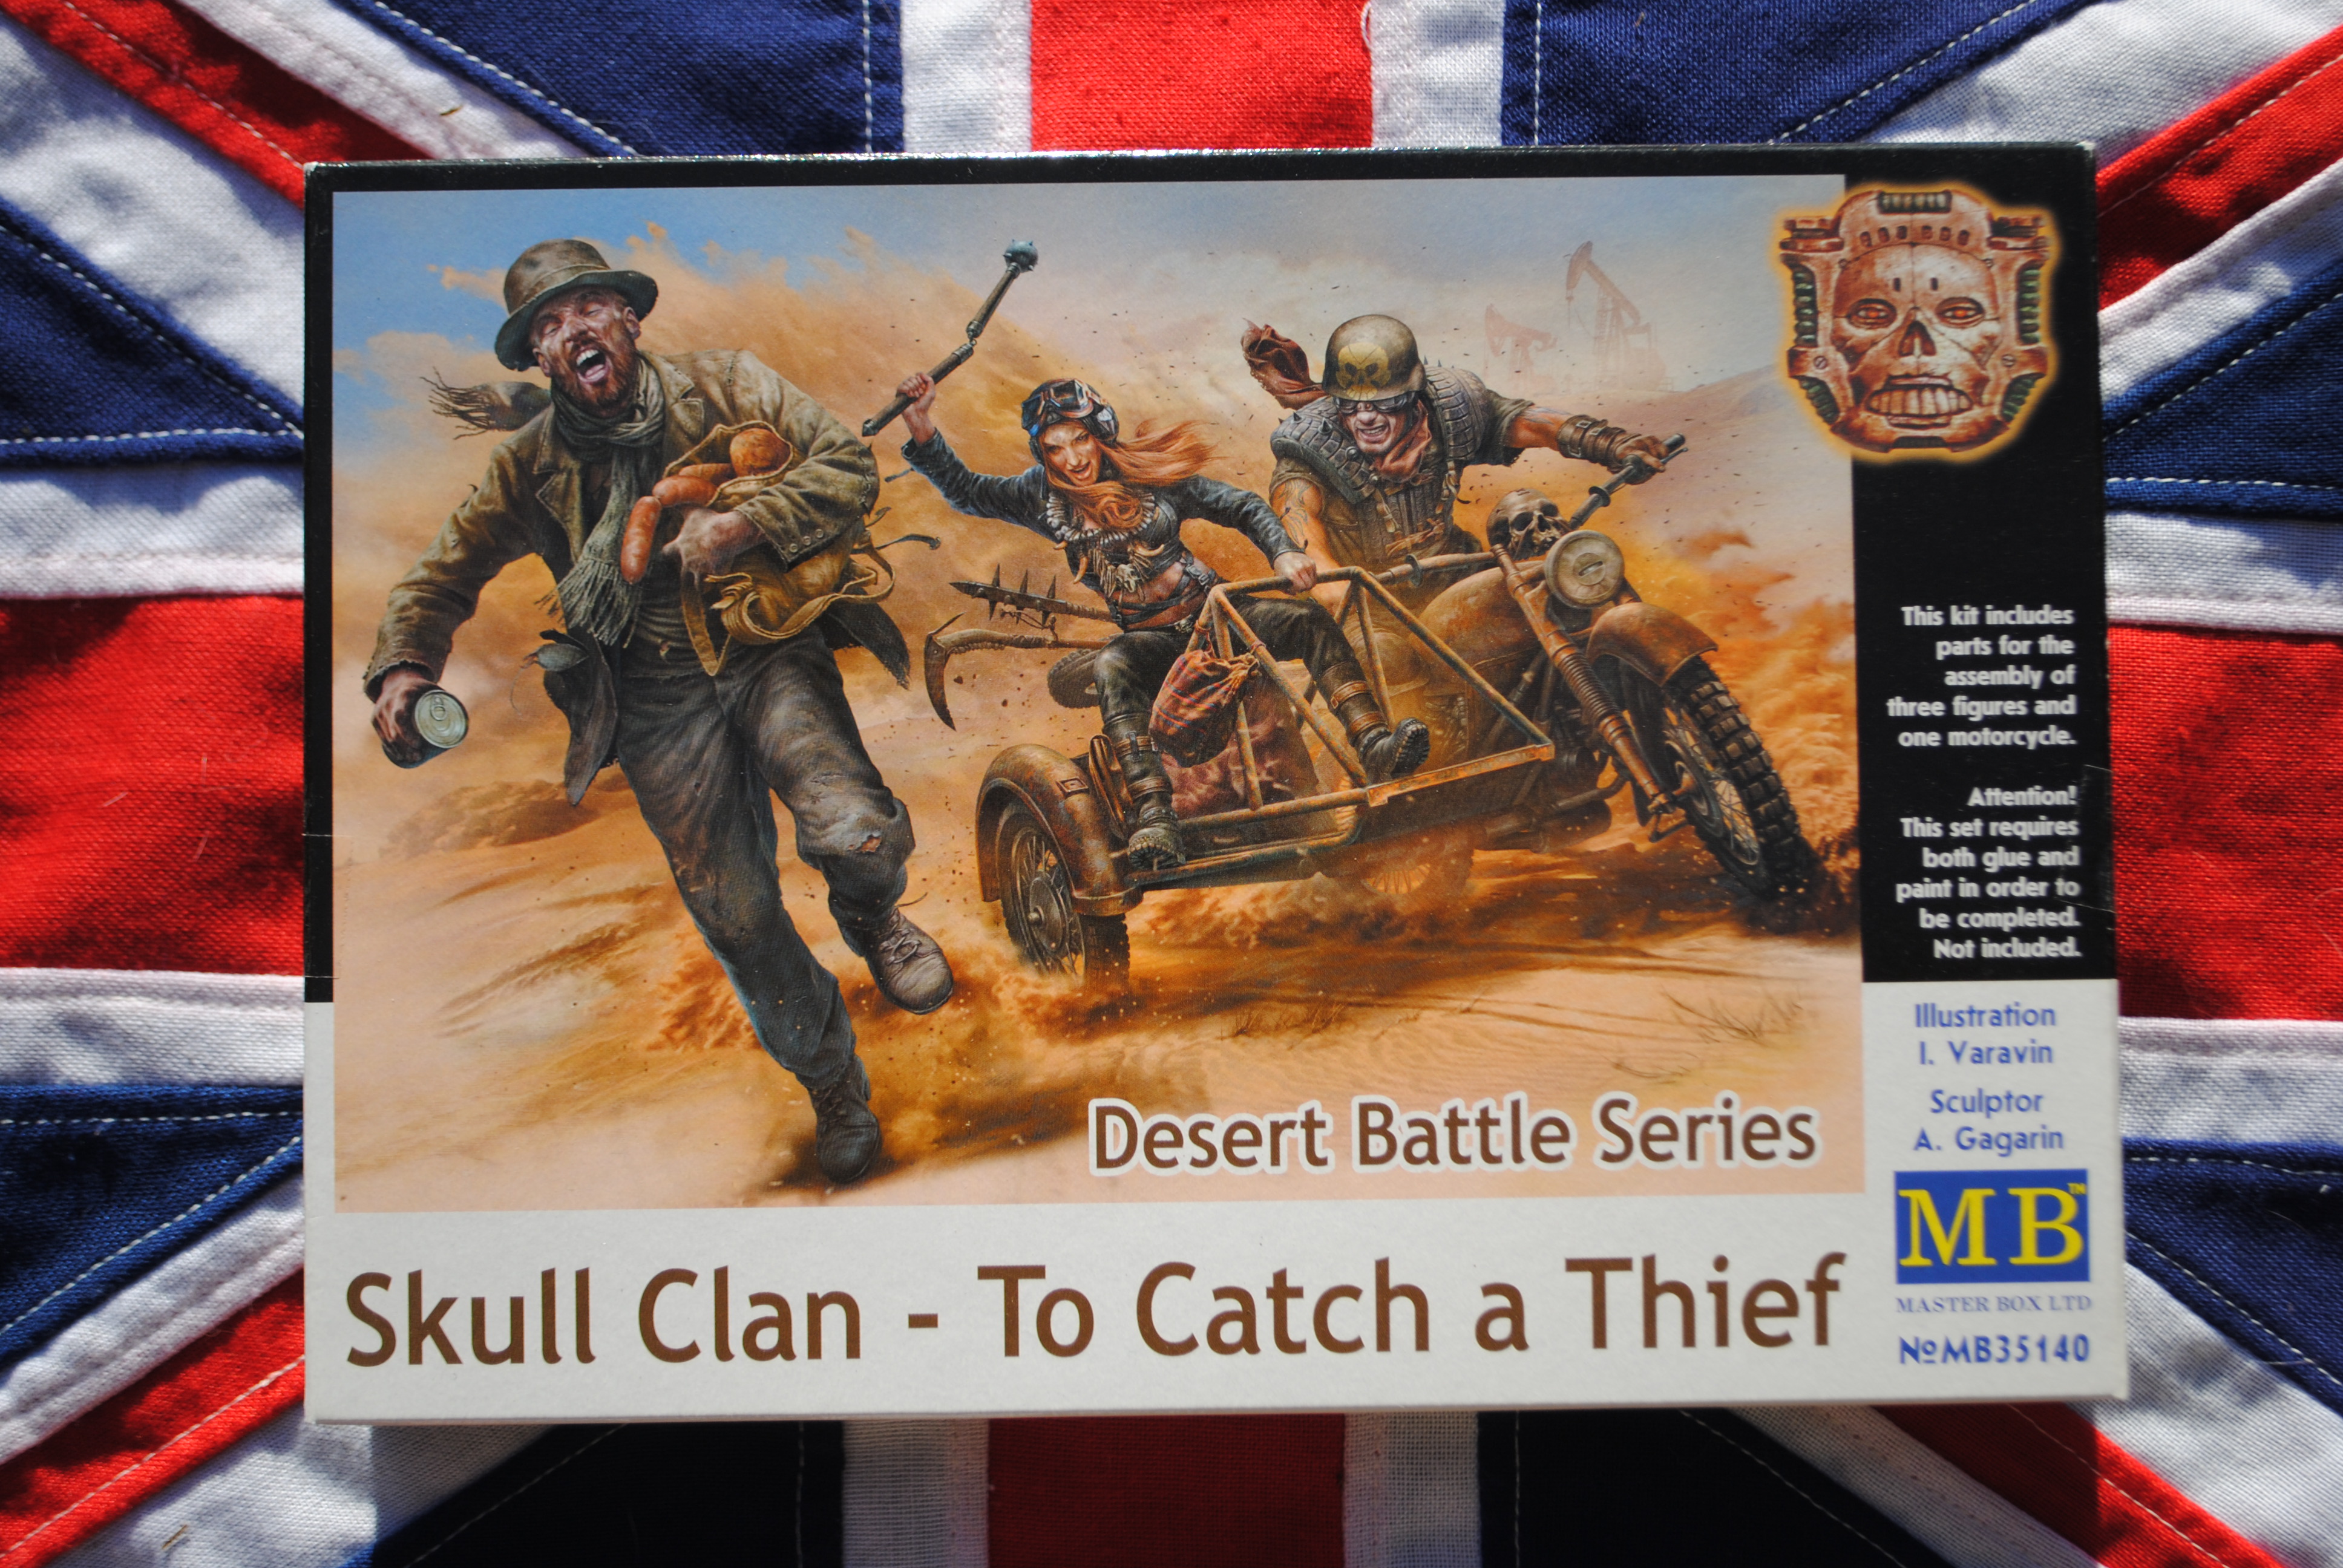 Master Box MB35140 Desert Battle Series, Skull Clan - To Catch a Thief